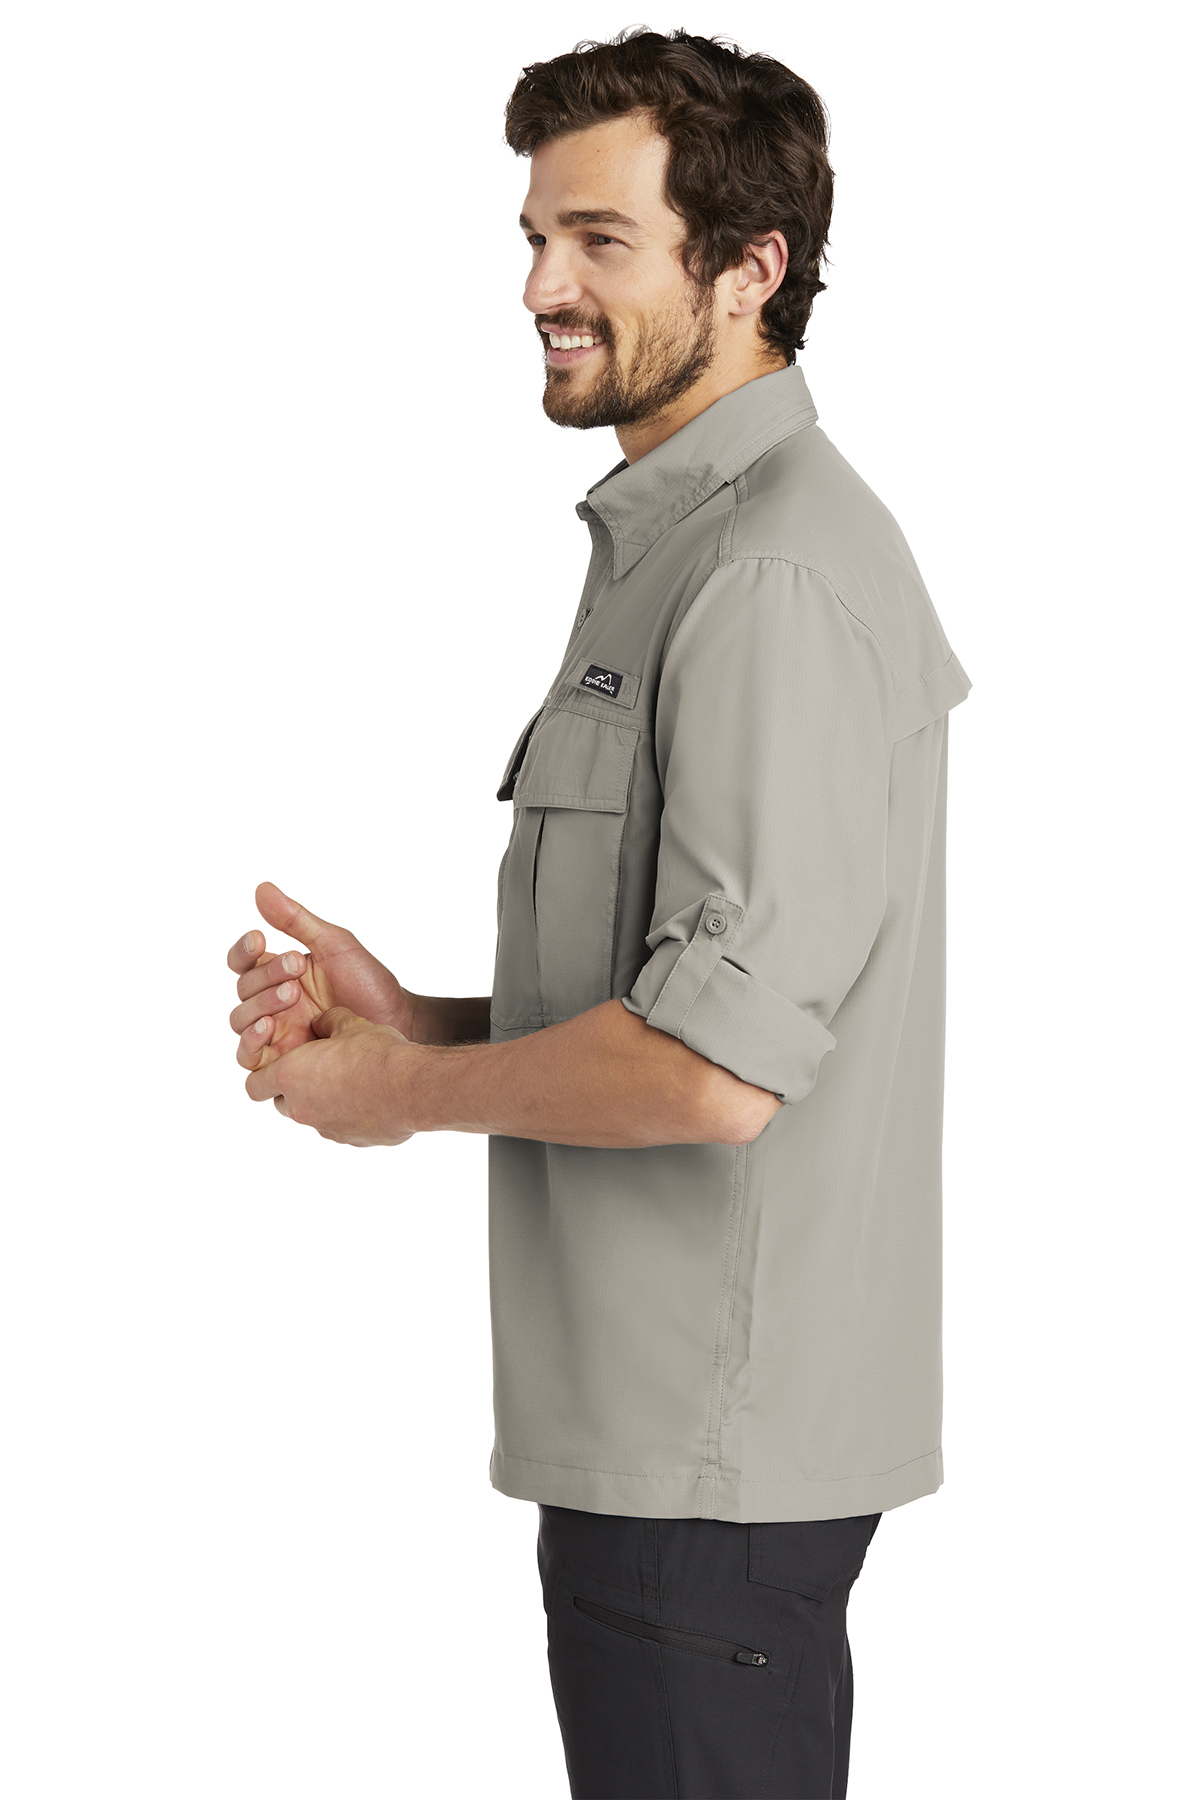 Eddie Bauer - Long Sleeve Performance Fishing Shirt, Product